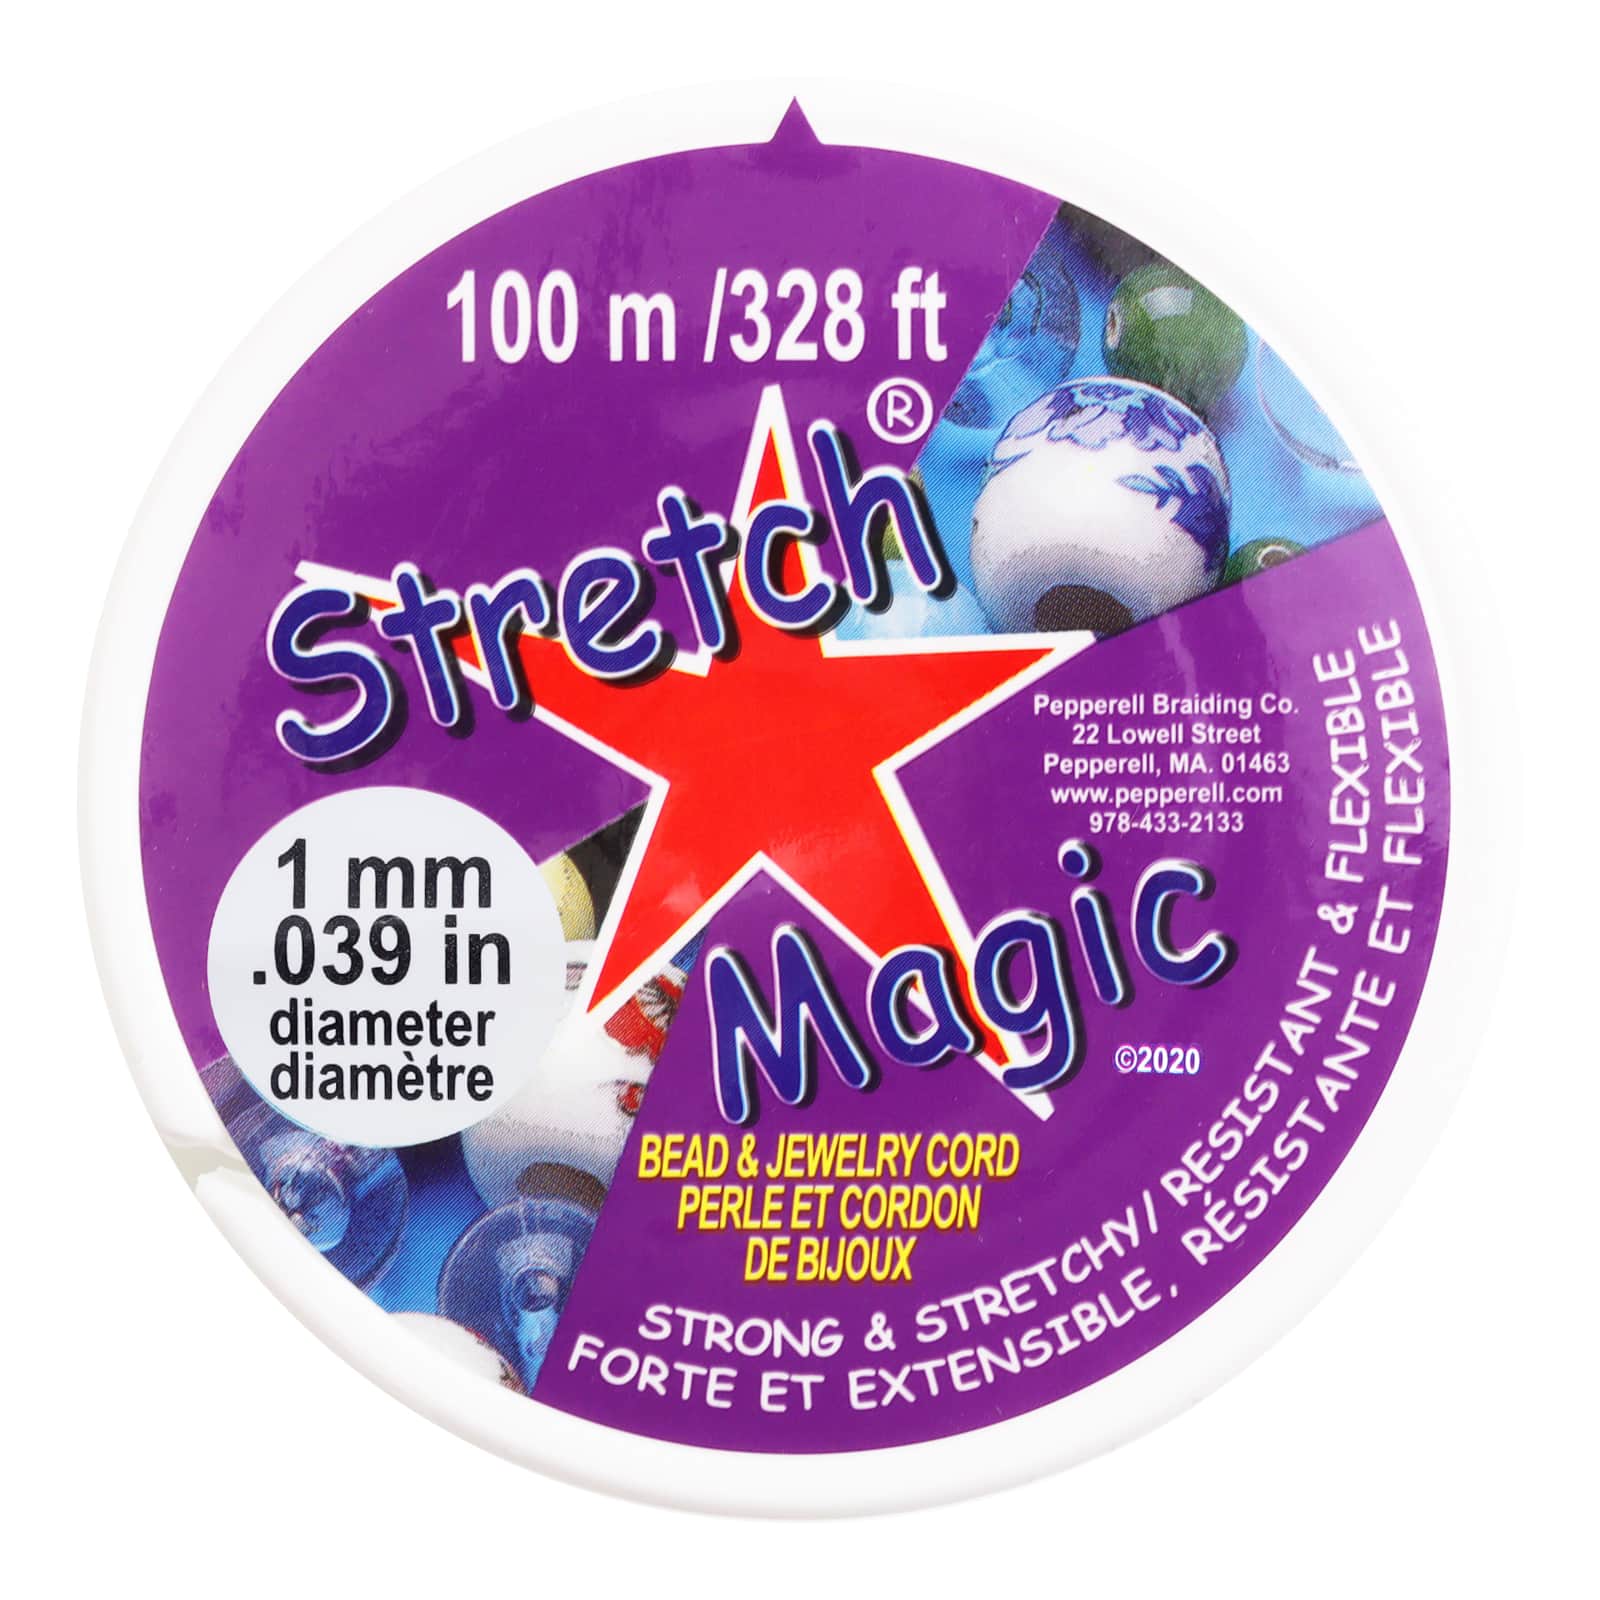 Stretch Magic® 1mm Clear Bead & Jewelry Cord, 100m